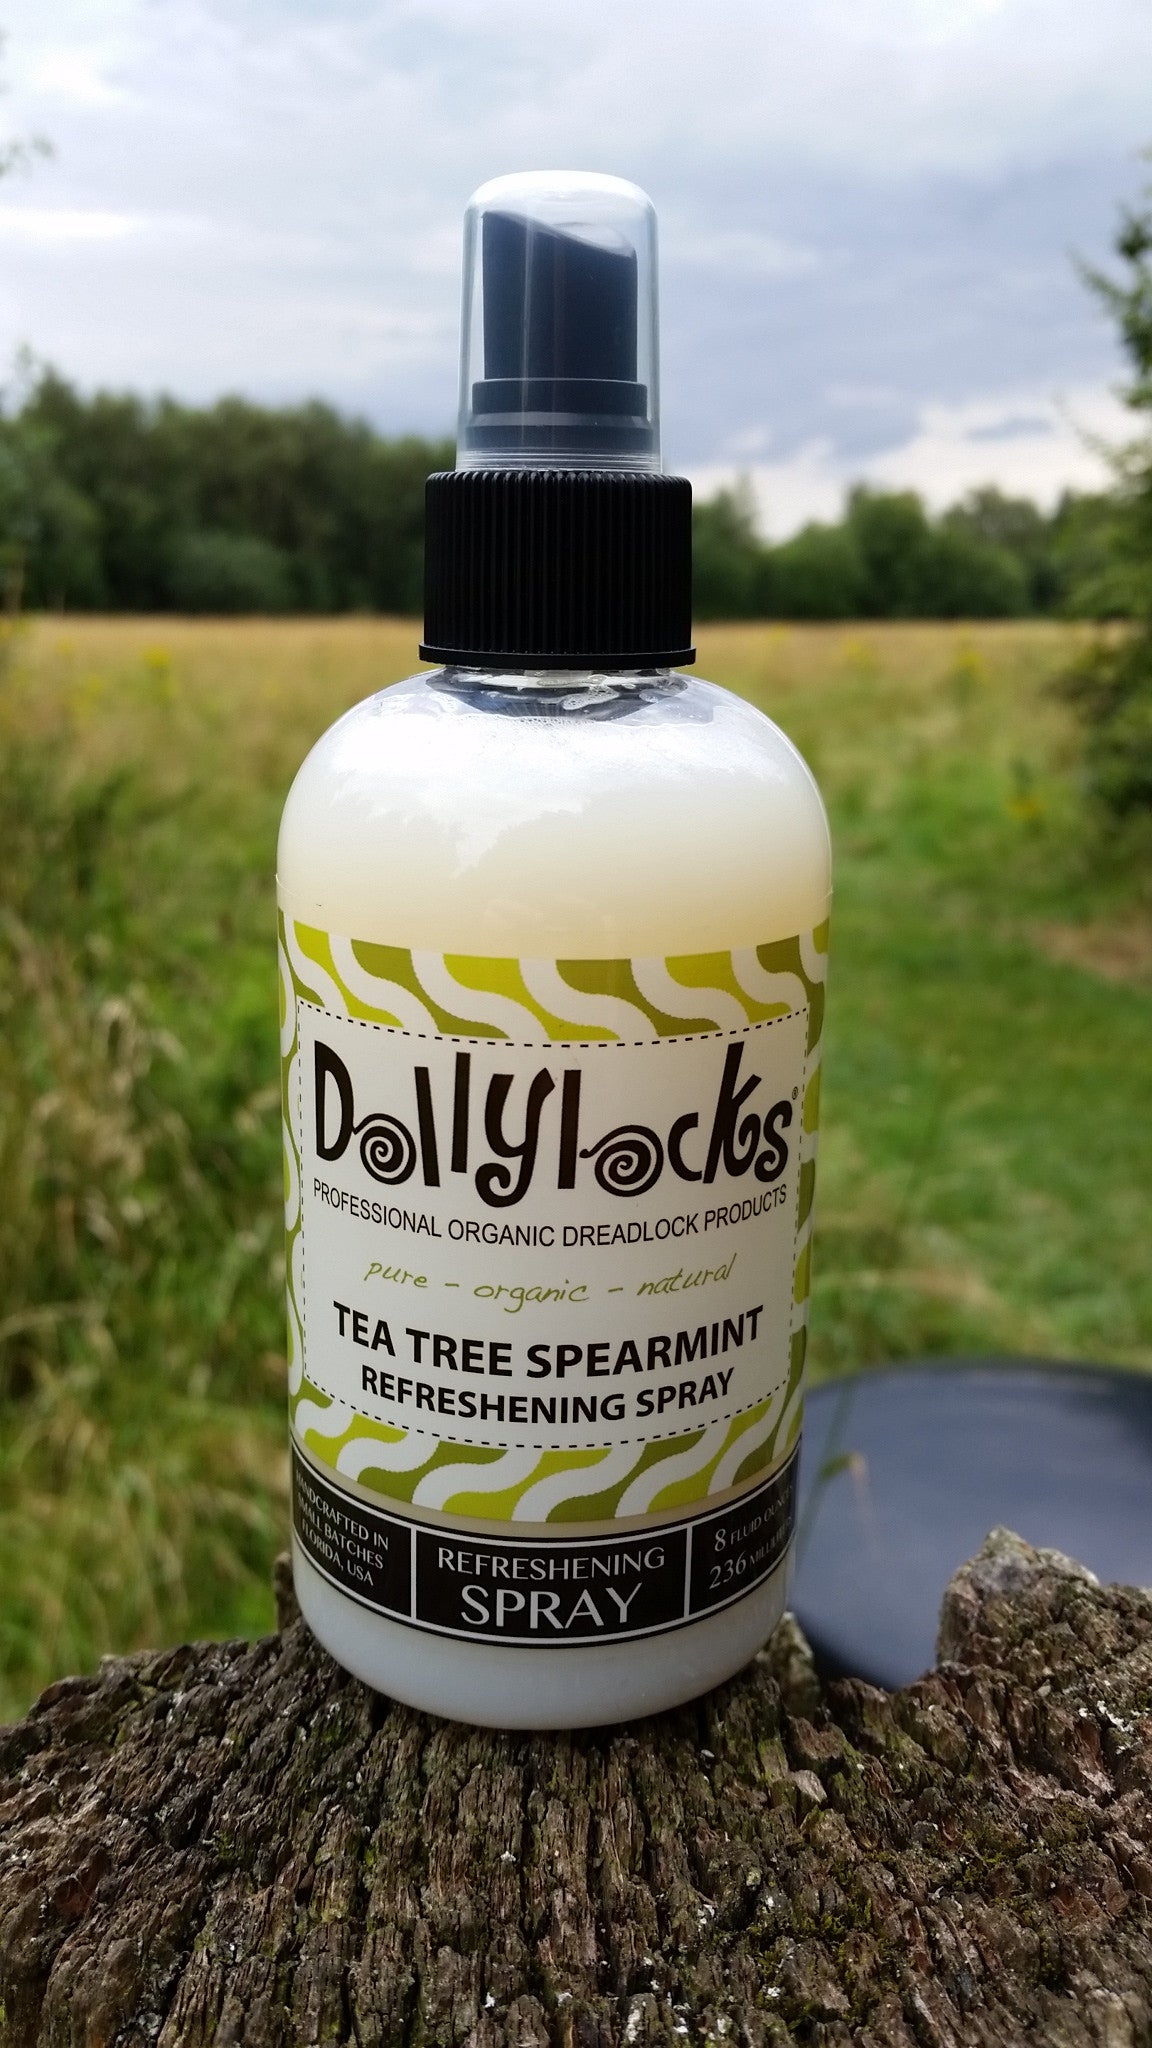 Dollylocks Dreadlock Tightening Spray